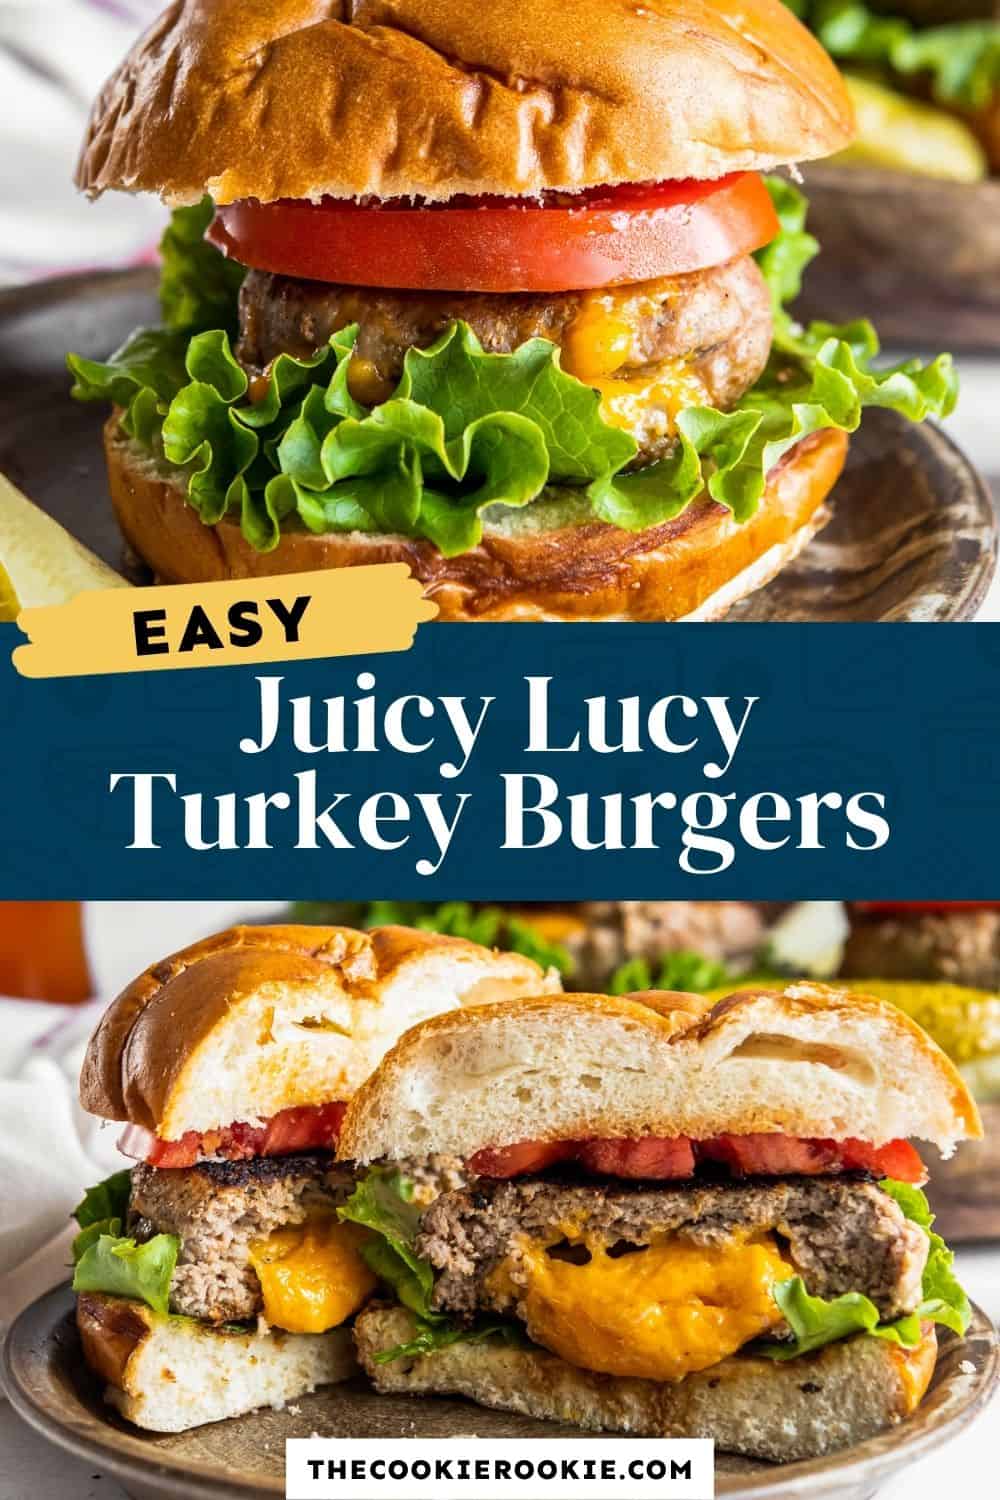 Juicy Lucy Turkey Burgers Recipe - The Cookie Rookie®